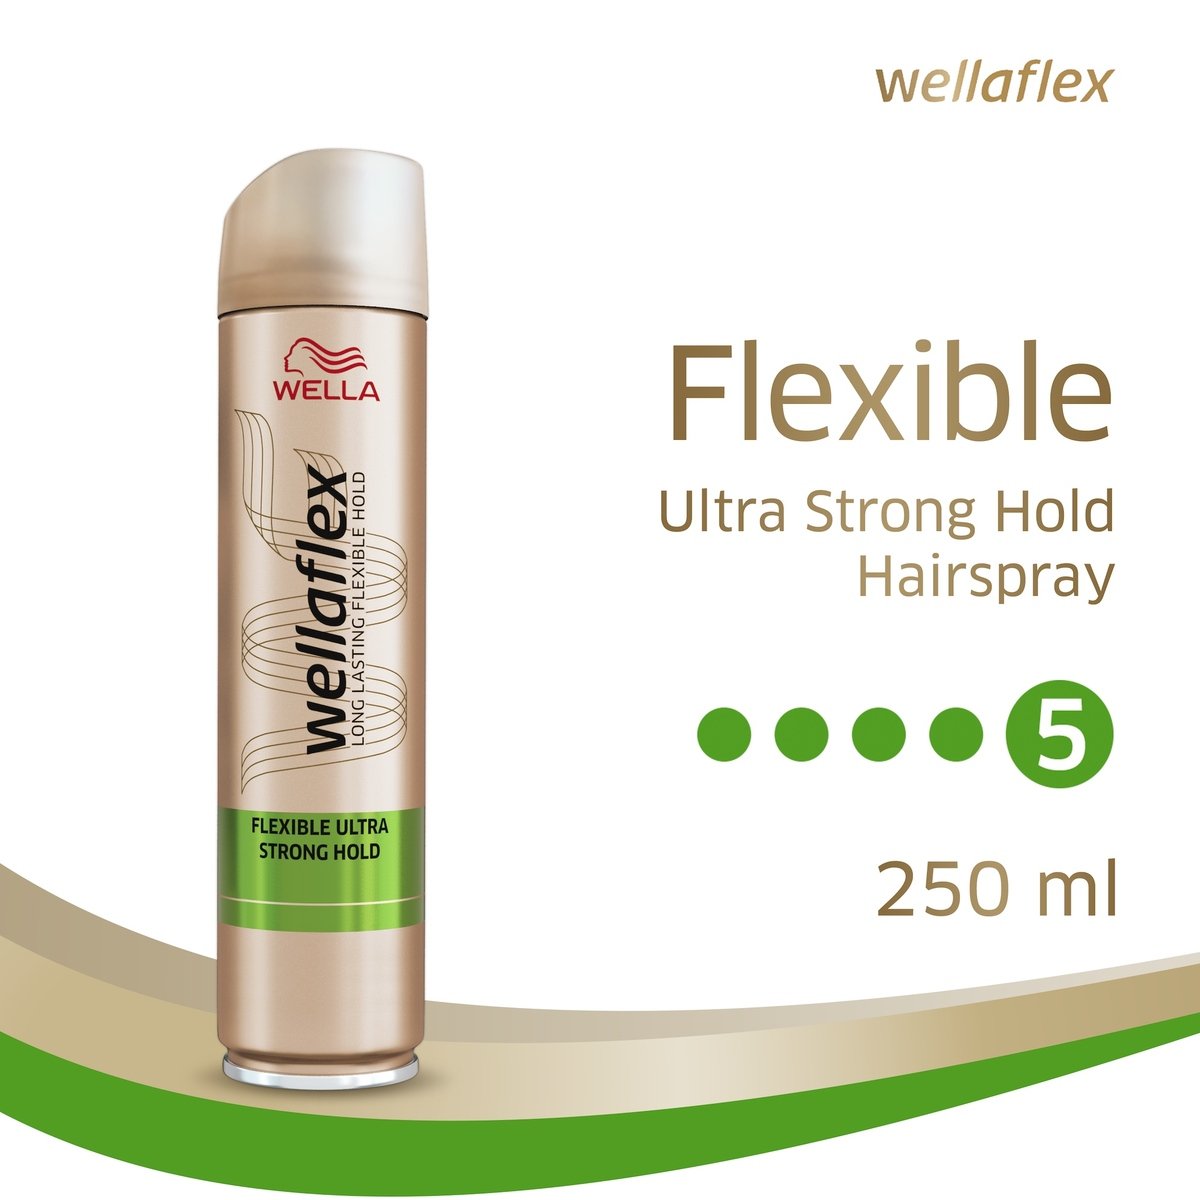 Wella Wellaflex Flexible Ultra Strong Hold Hairspray 250 ml